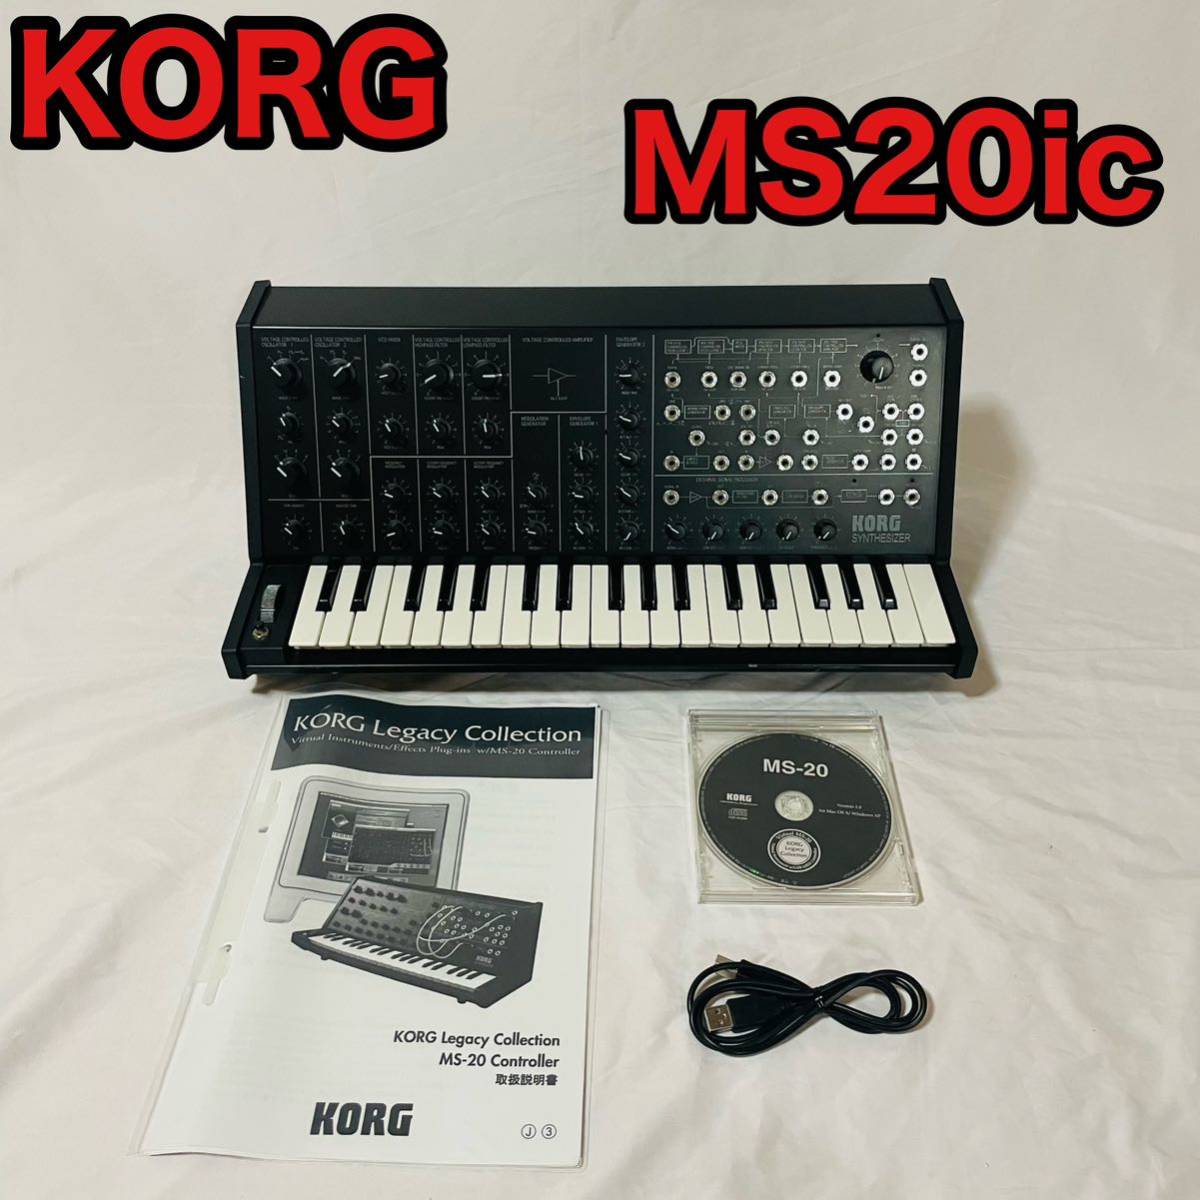 KORG MS20 ic シンセサイザーUSB-MIDIコントローラー-